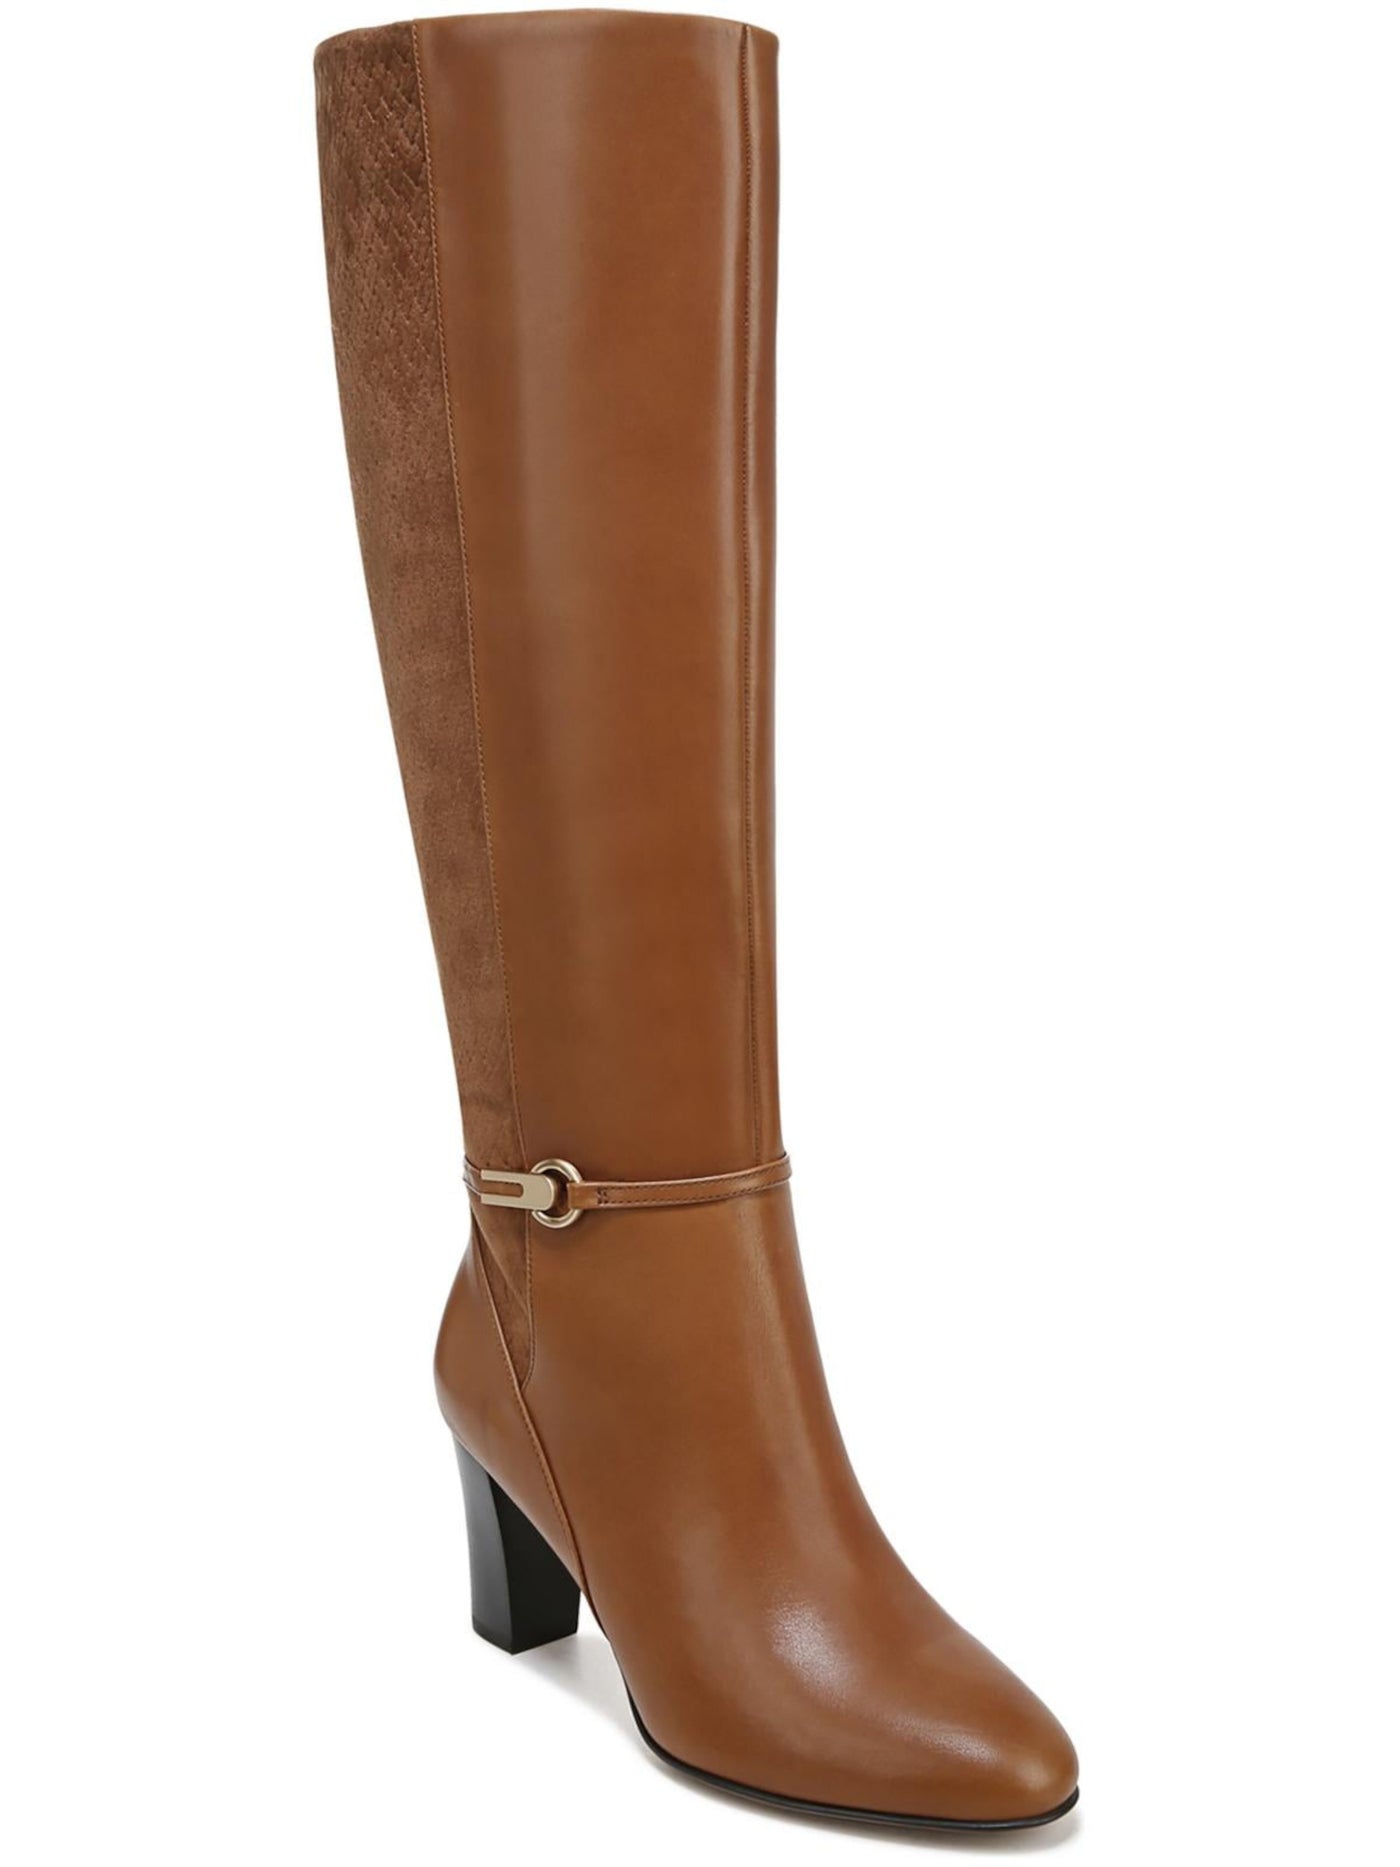 FRANCO SARTO Womens Brown Comfort Palermo Almond Toe Block Heel Zip-Up Leather Dress Boots 9.5 M